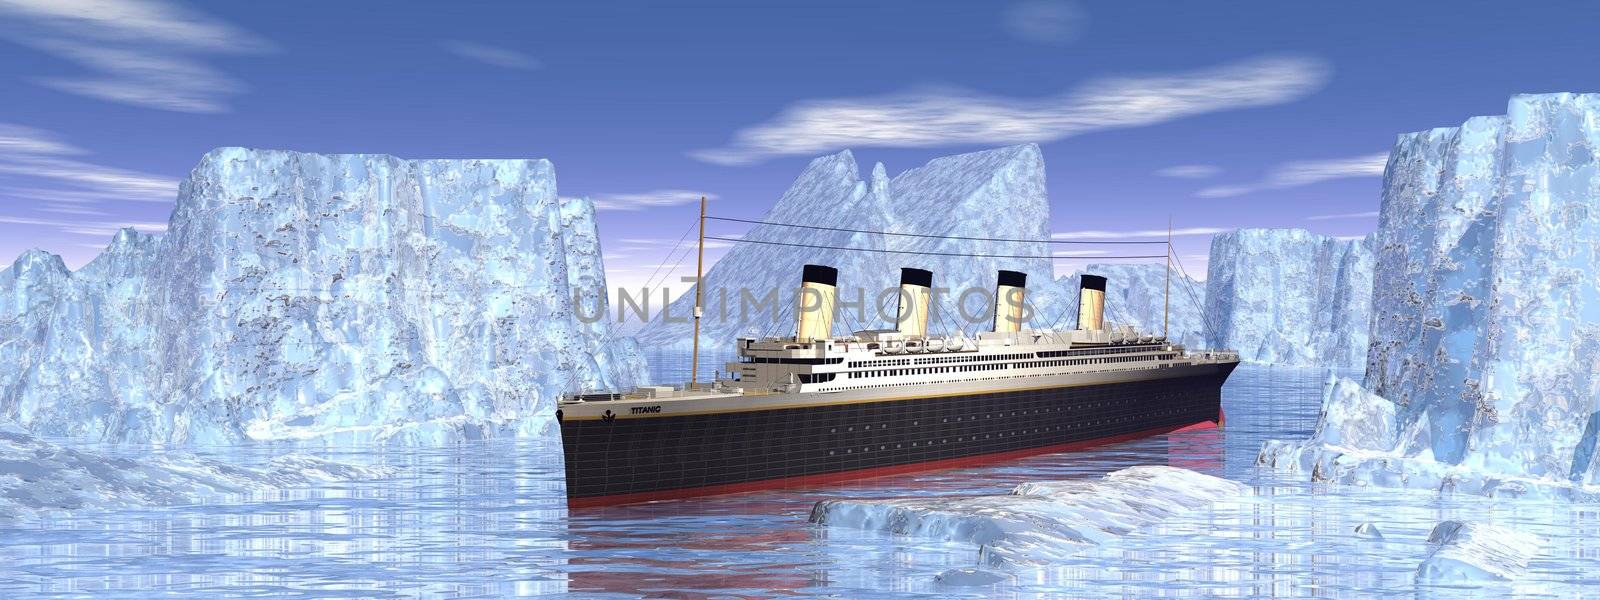 Titanic boat by Elenaphotos21